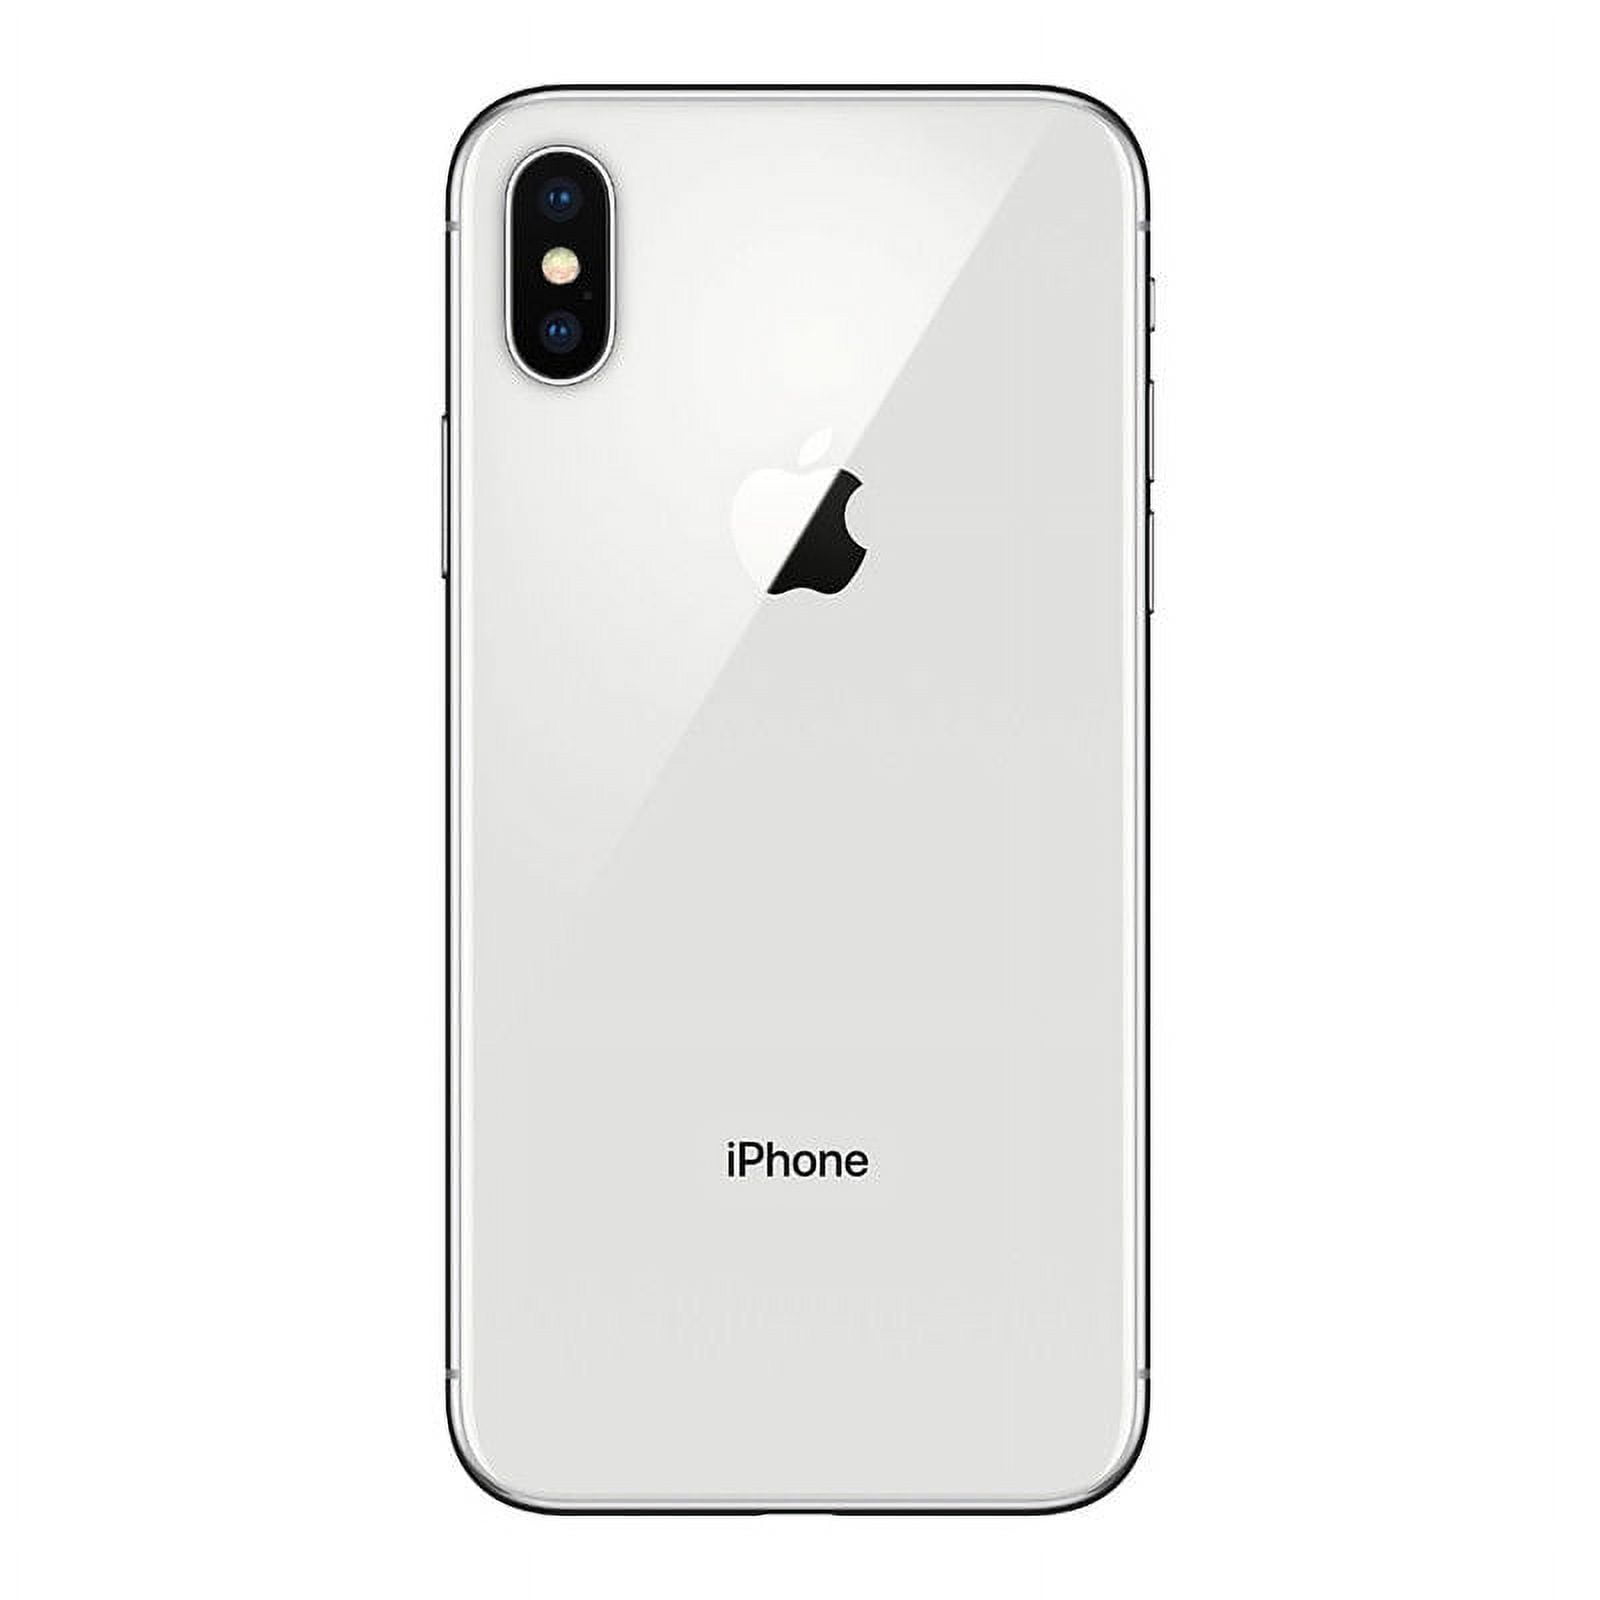 Pre-Owned Apple iPhone X 64GB Factory Unlocked Smartphone (Refurbished:  Good)